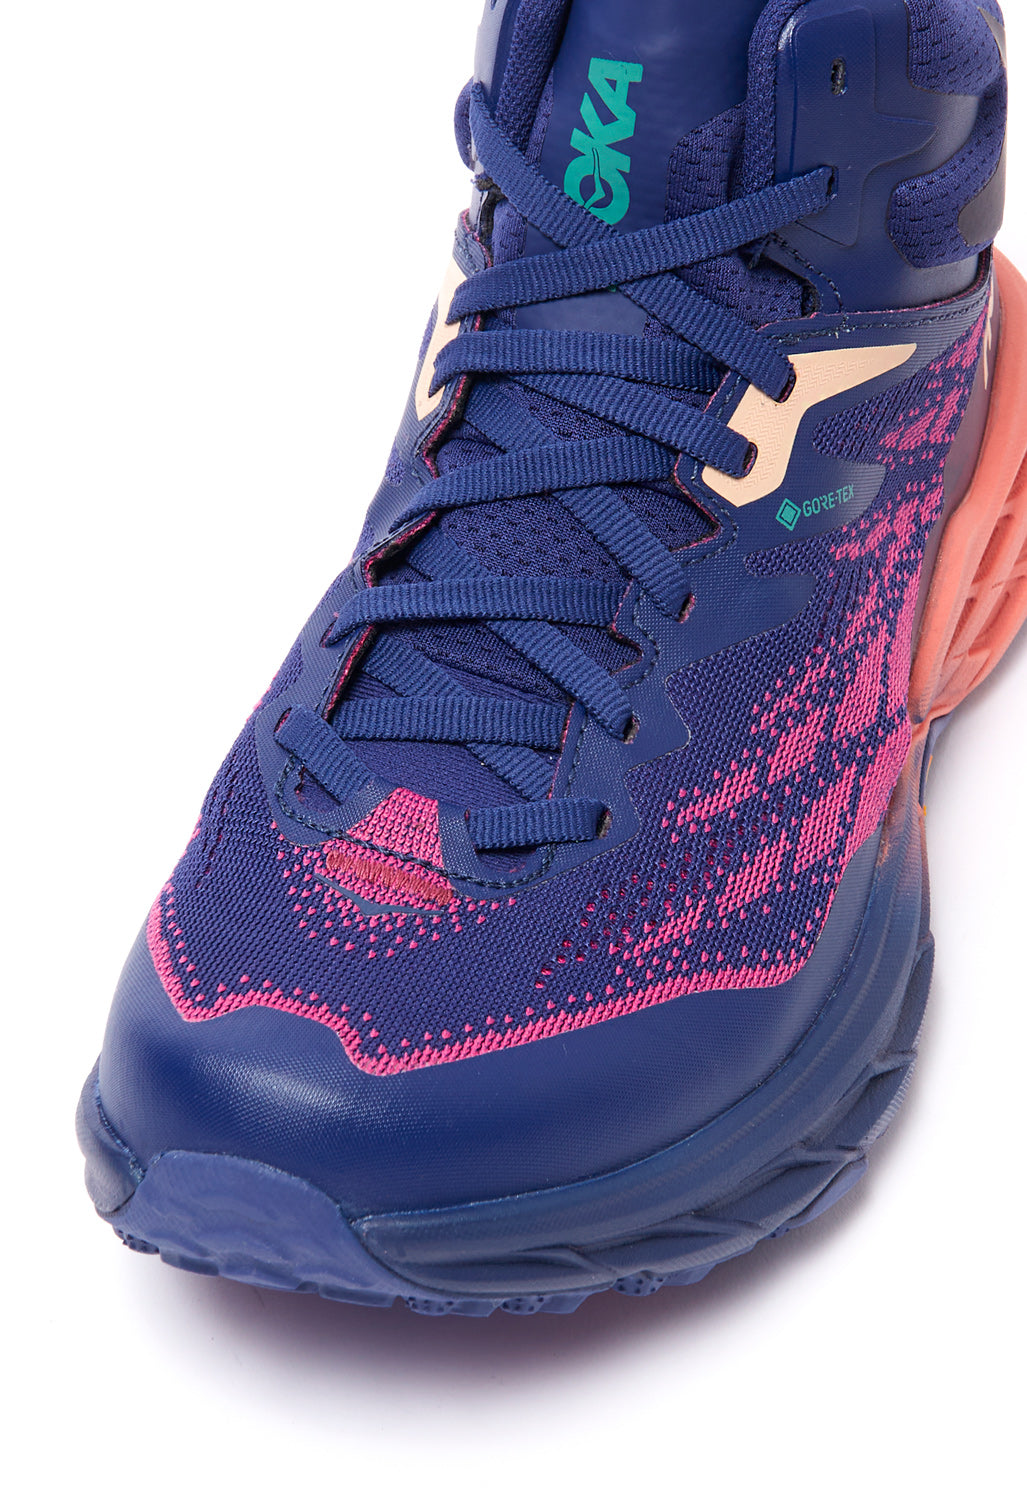 Hoka Speedgoat 5 Mid GORE-TEX Women's Boots - Bellwether Blue/Camellia